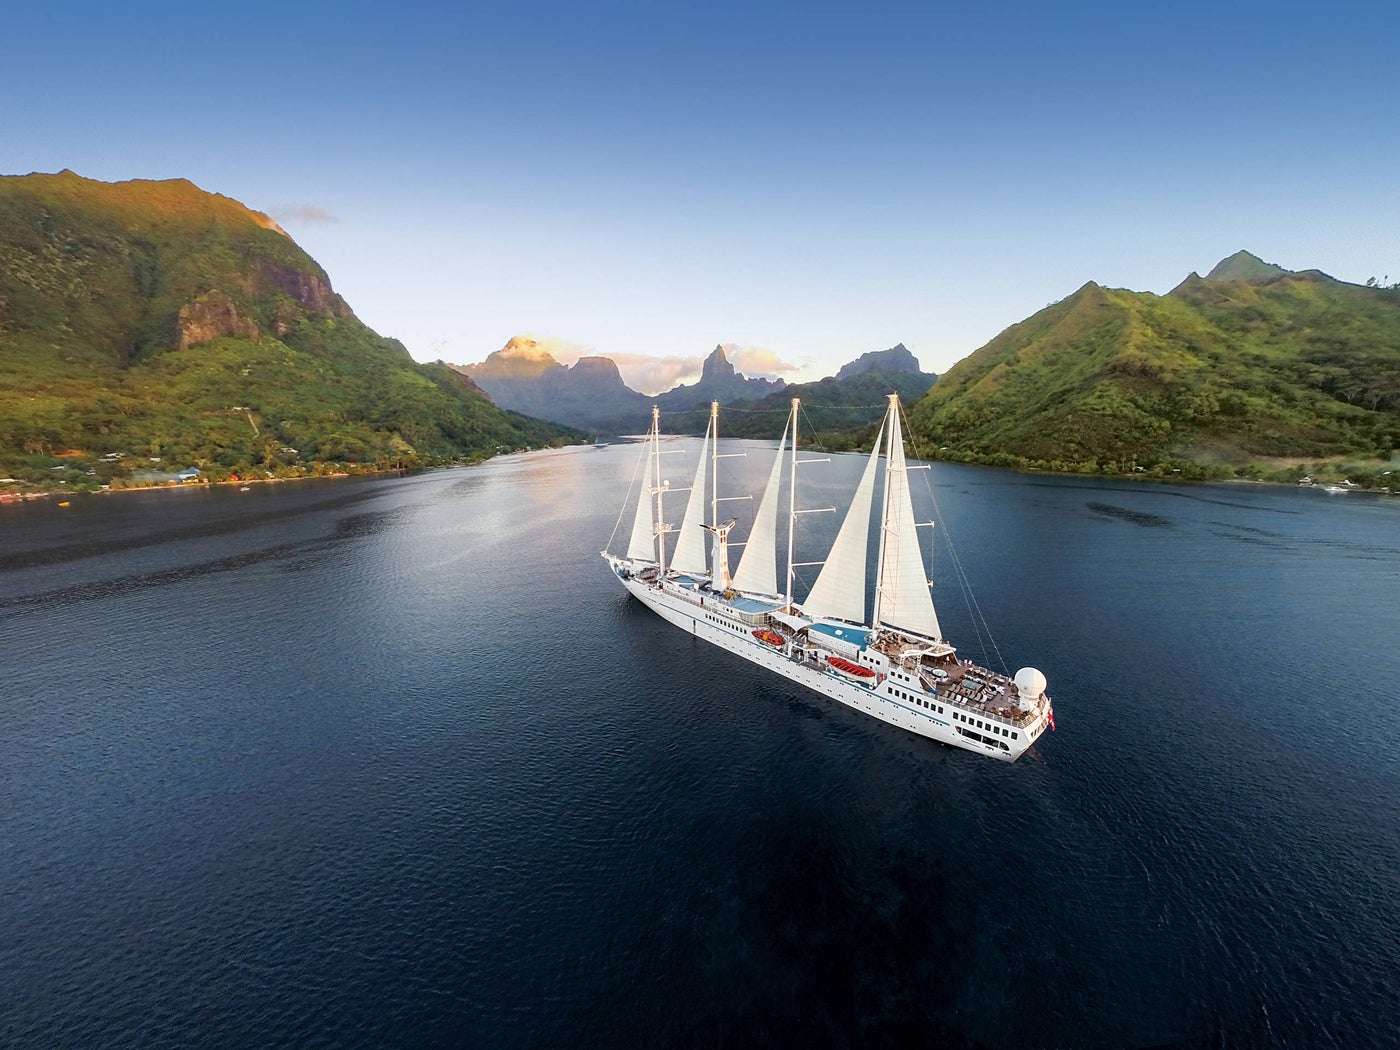 Islandhop in paradise Cruises return to French Polynesia